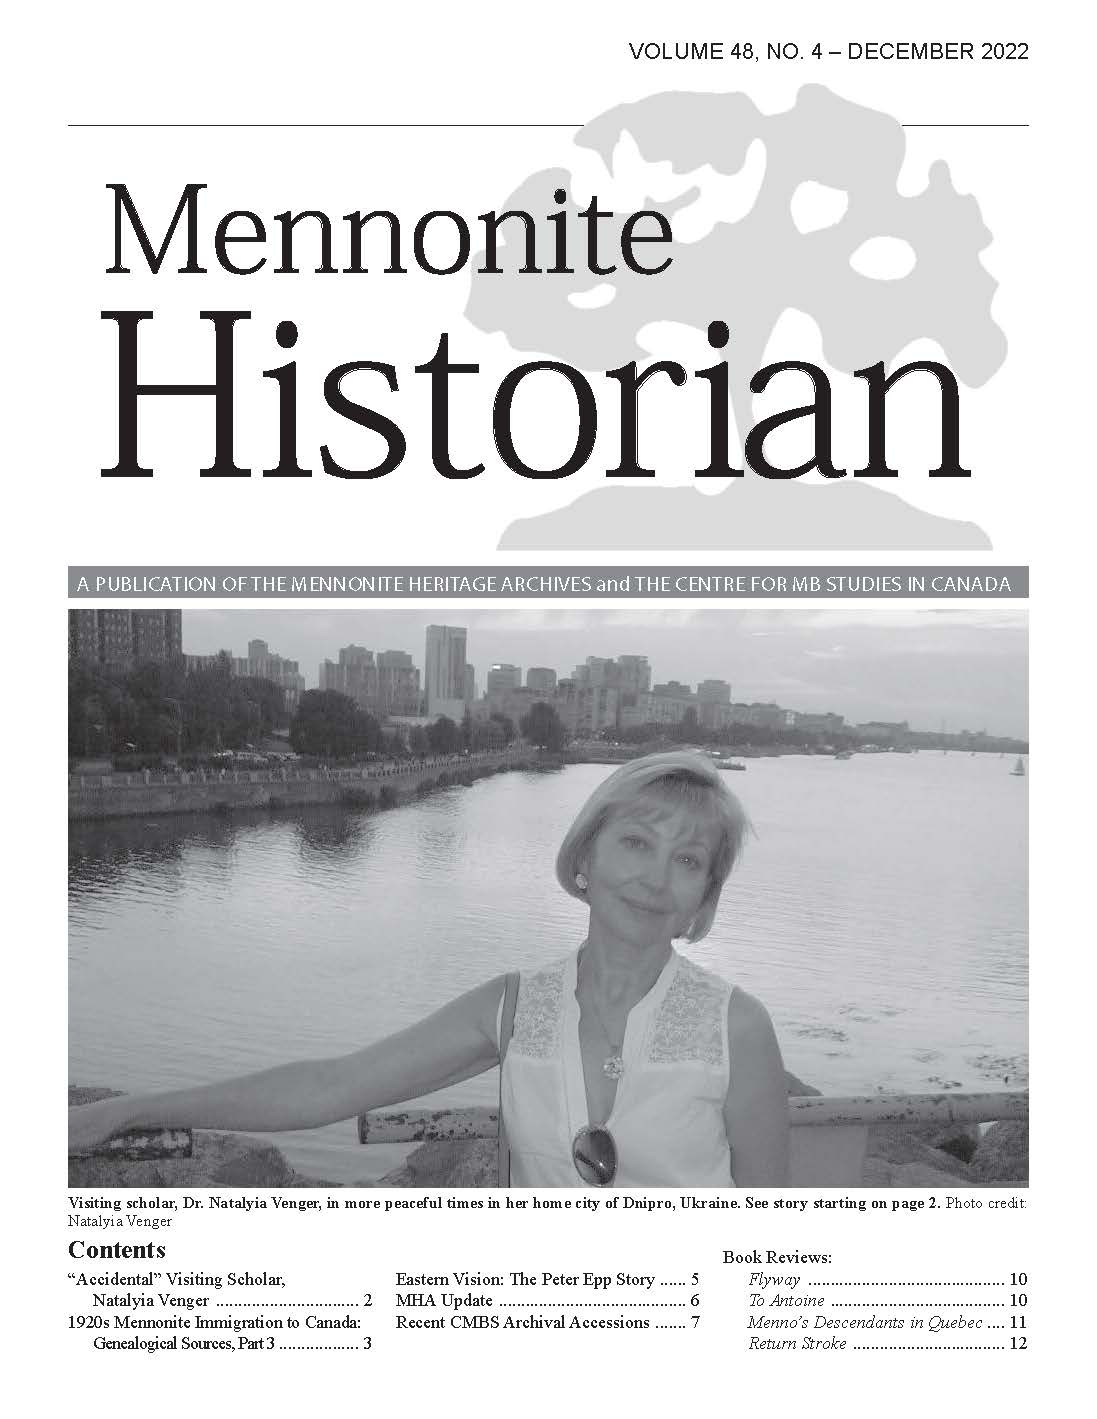 Mennonite Historian (Dec. 2022)